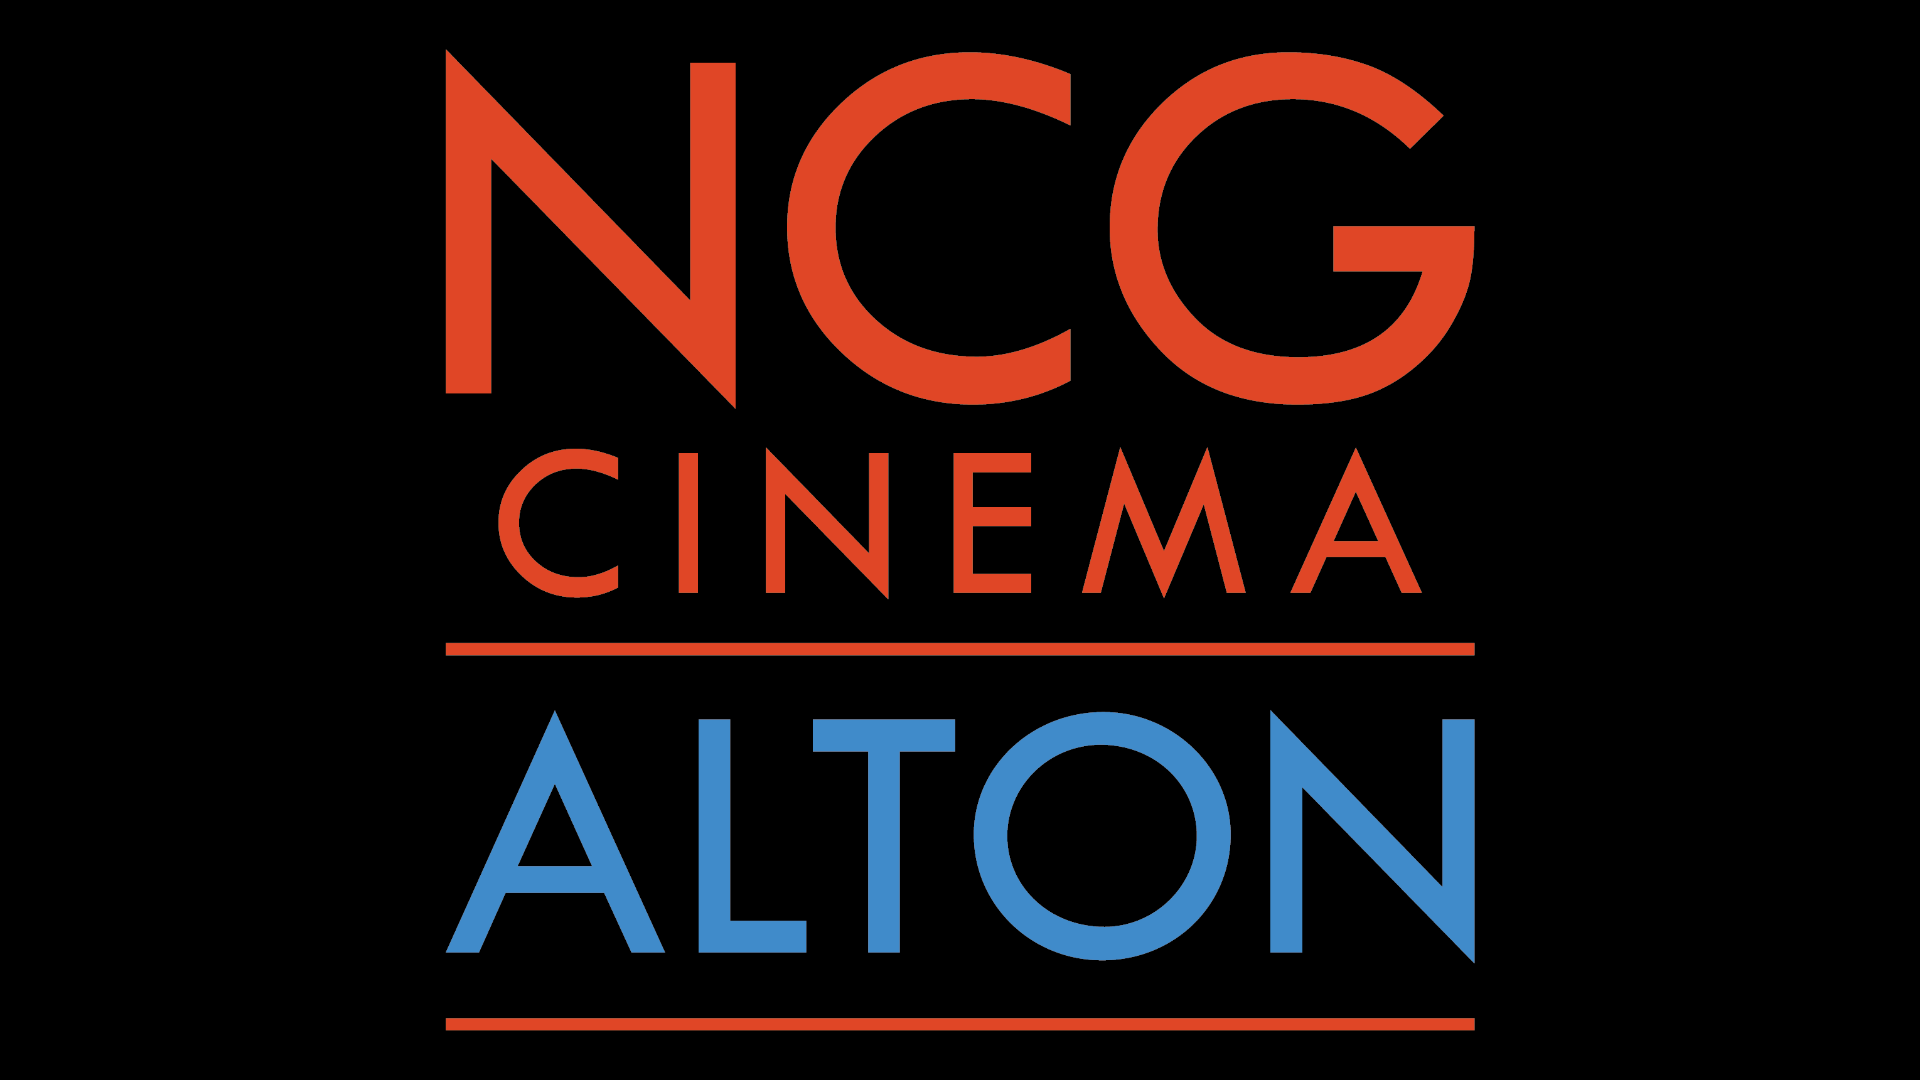 New movie theater coming to Alton, Illinois | ksdk.com